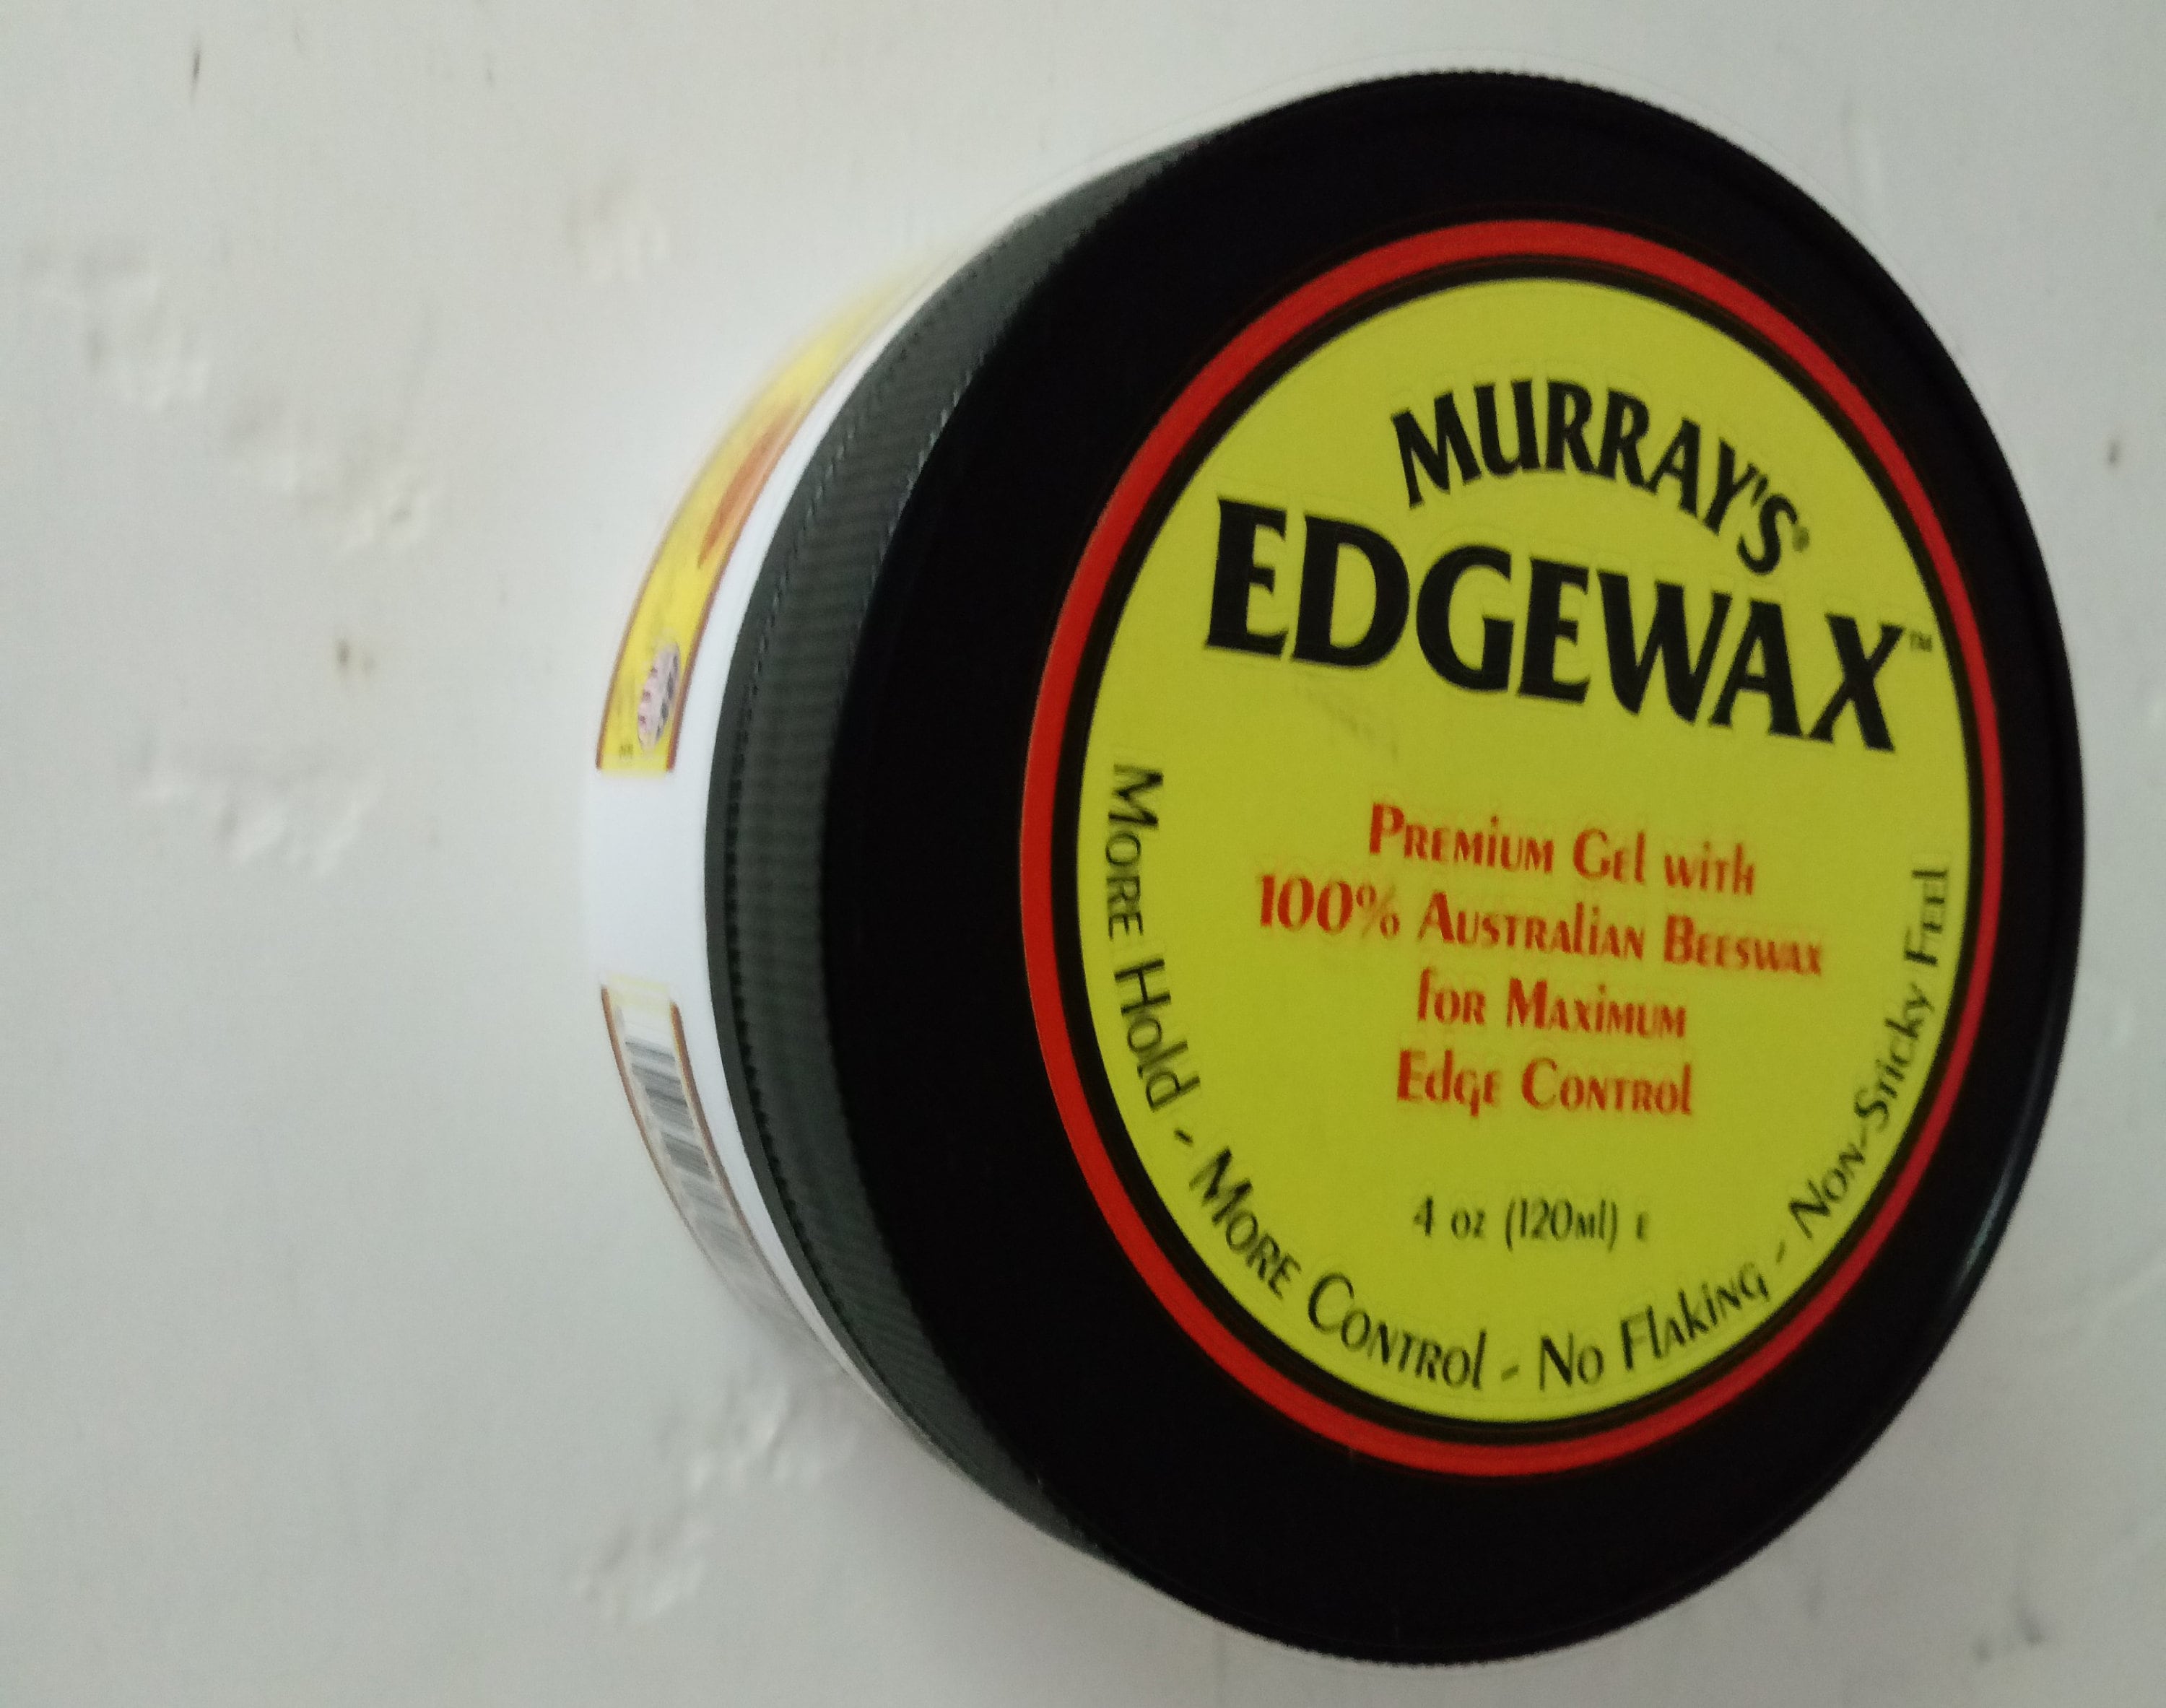 Murray's Edgewax 100% Australian Beeswax 4 Ounce